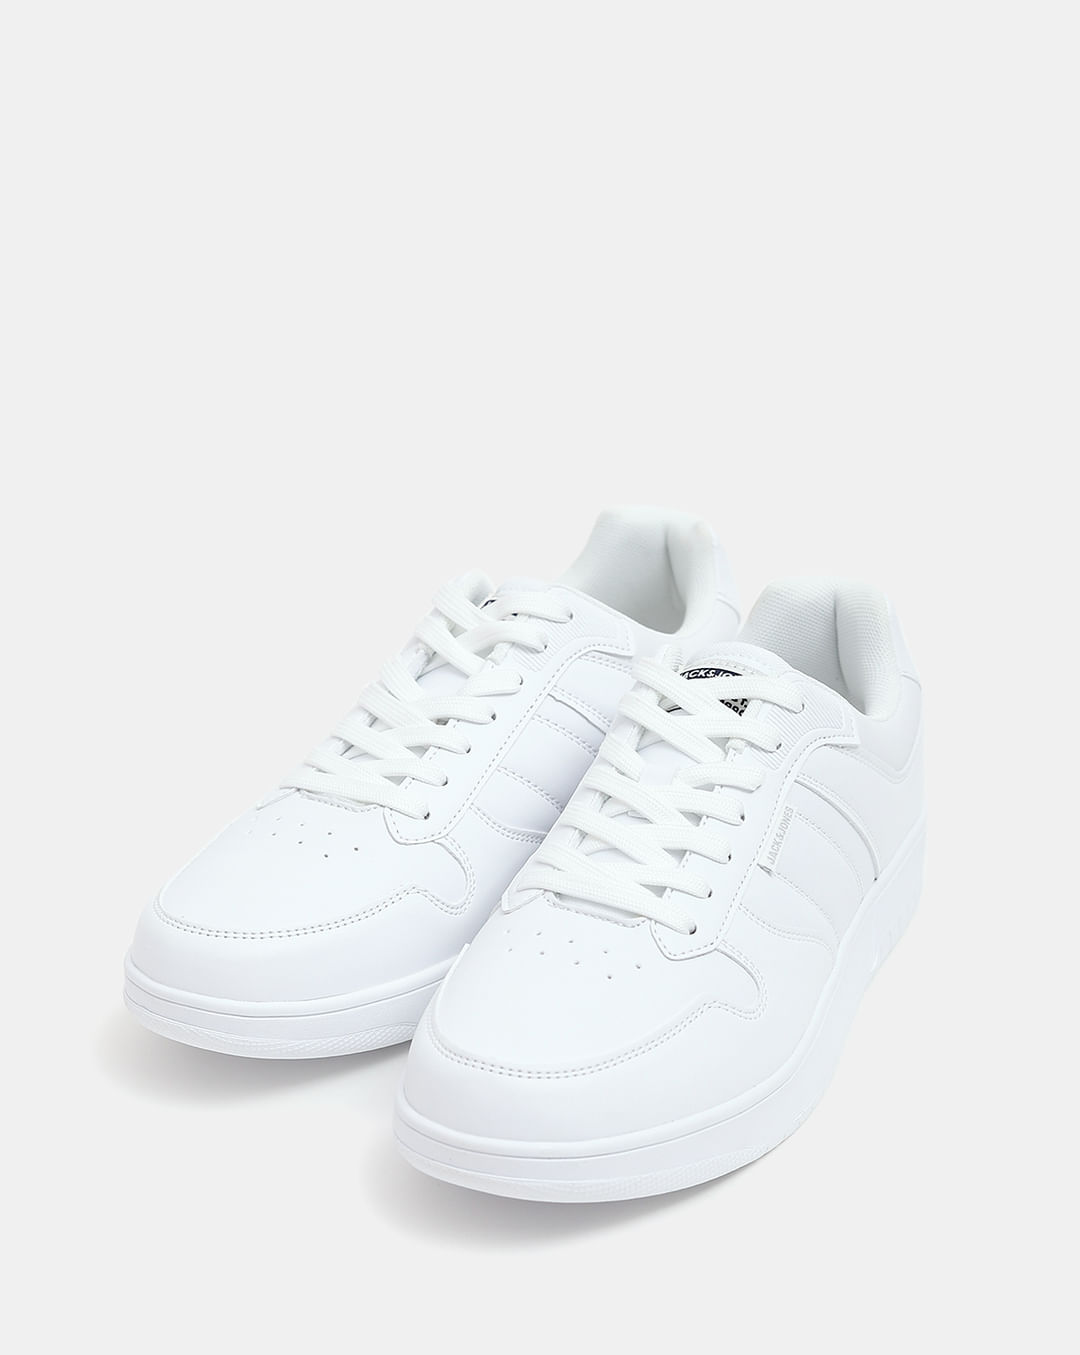  Jack & Jones Men's Low-Top Sneakers, White Bright White, 9